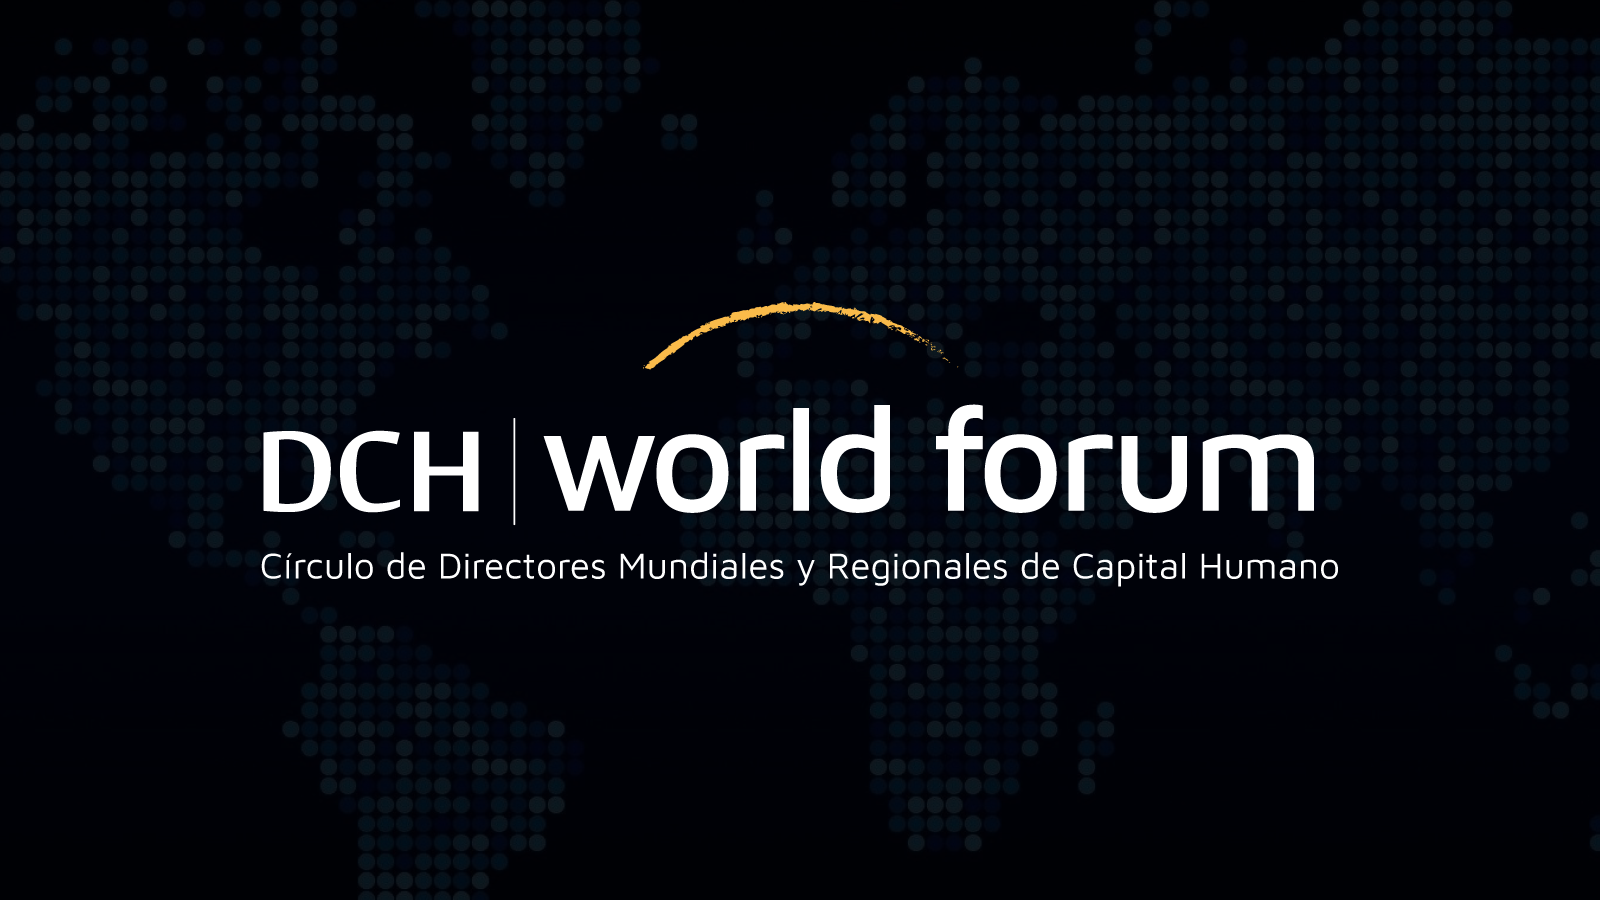 edch world forum